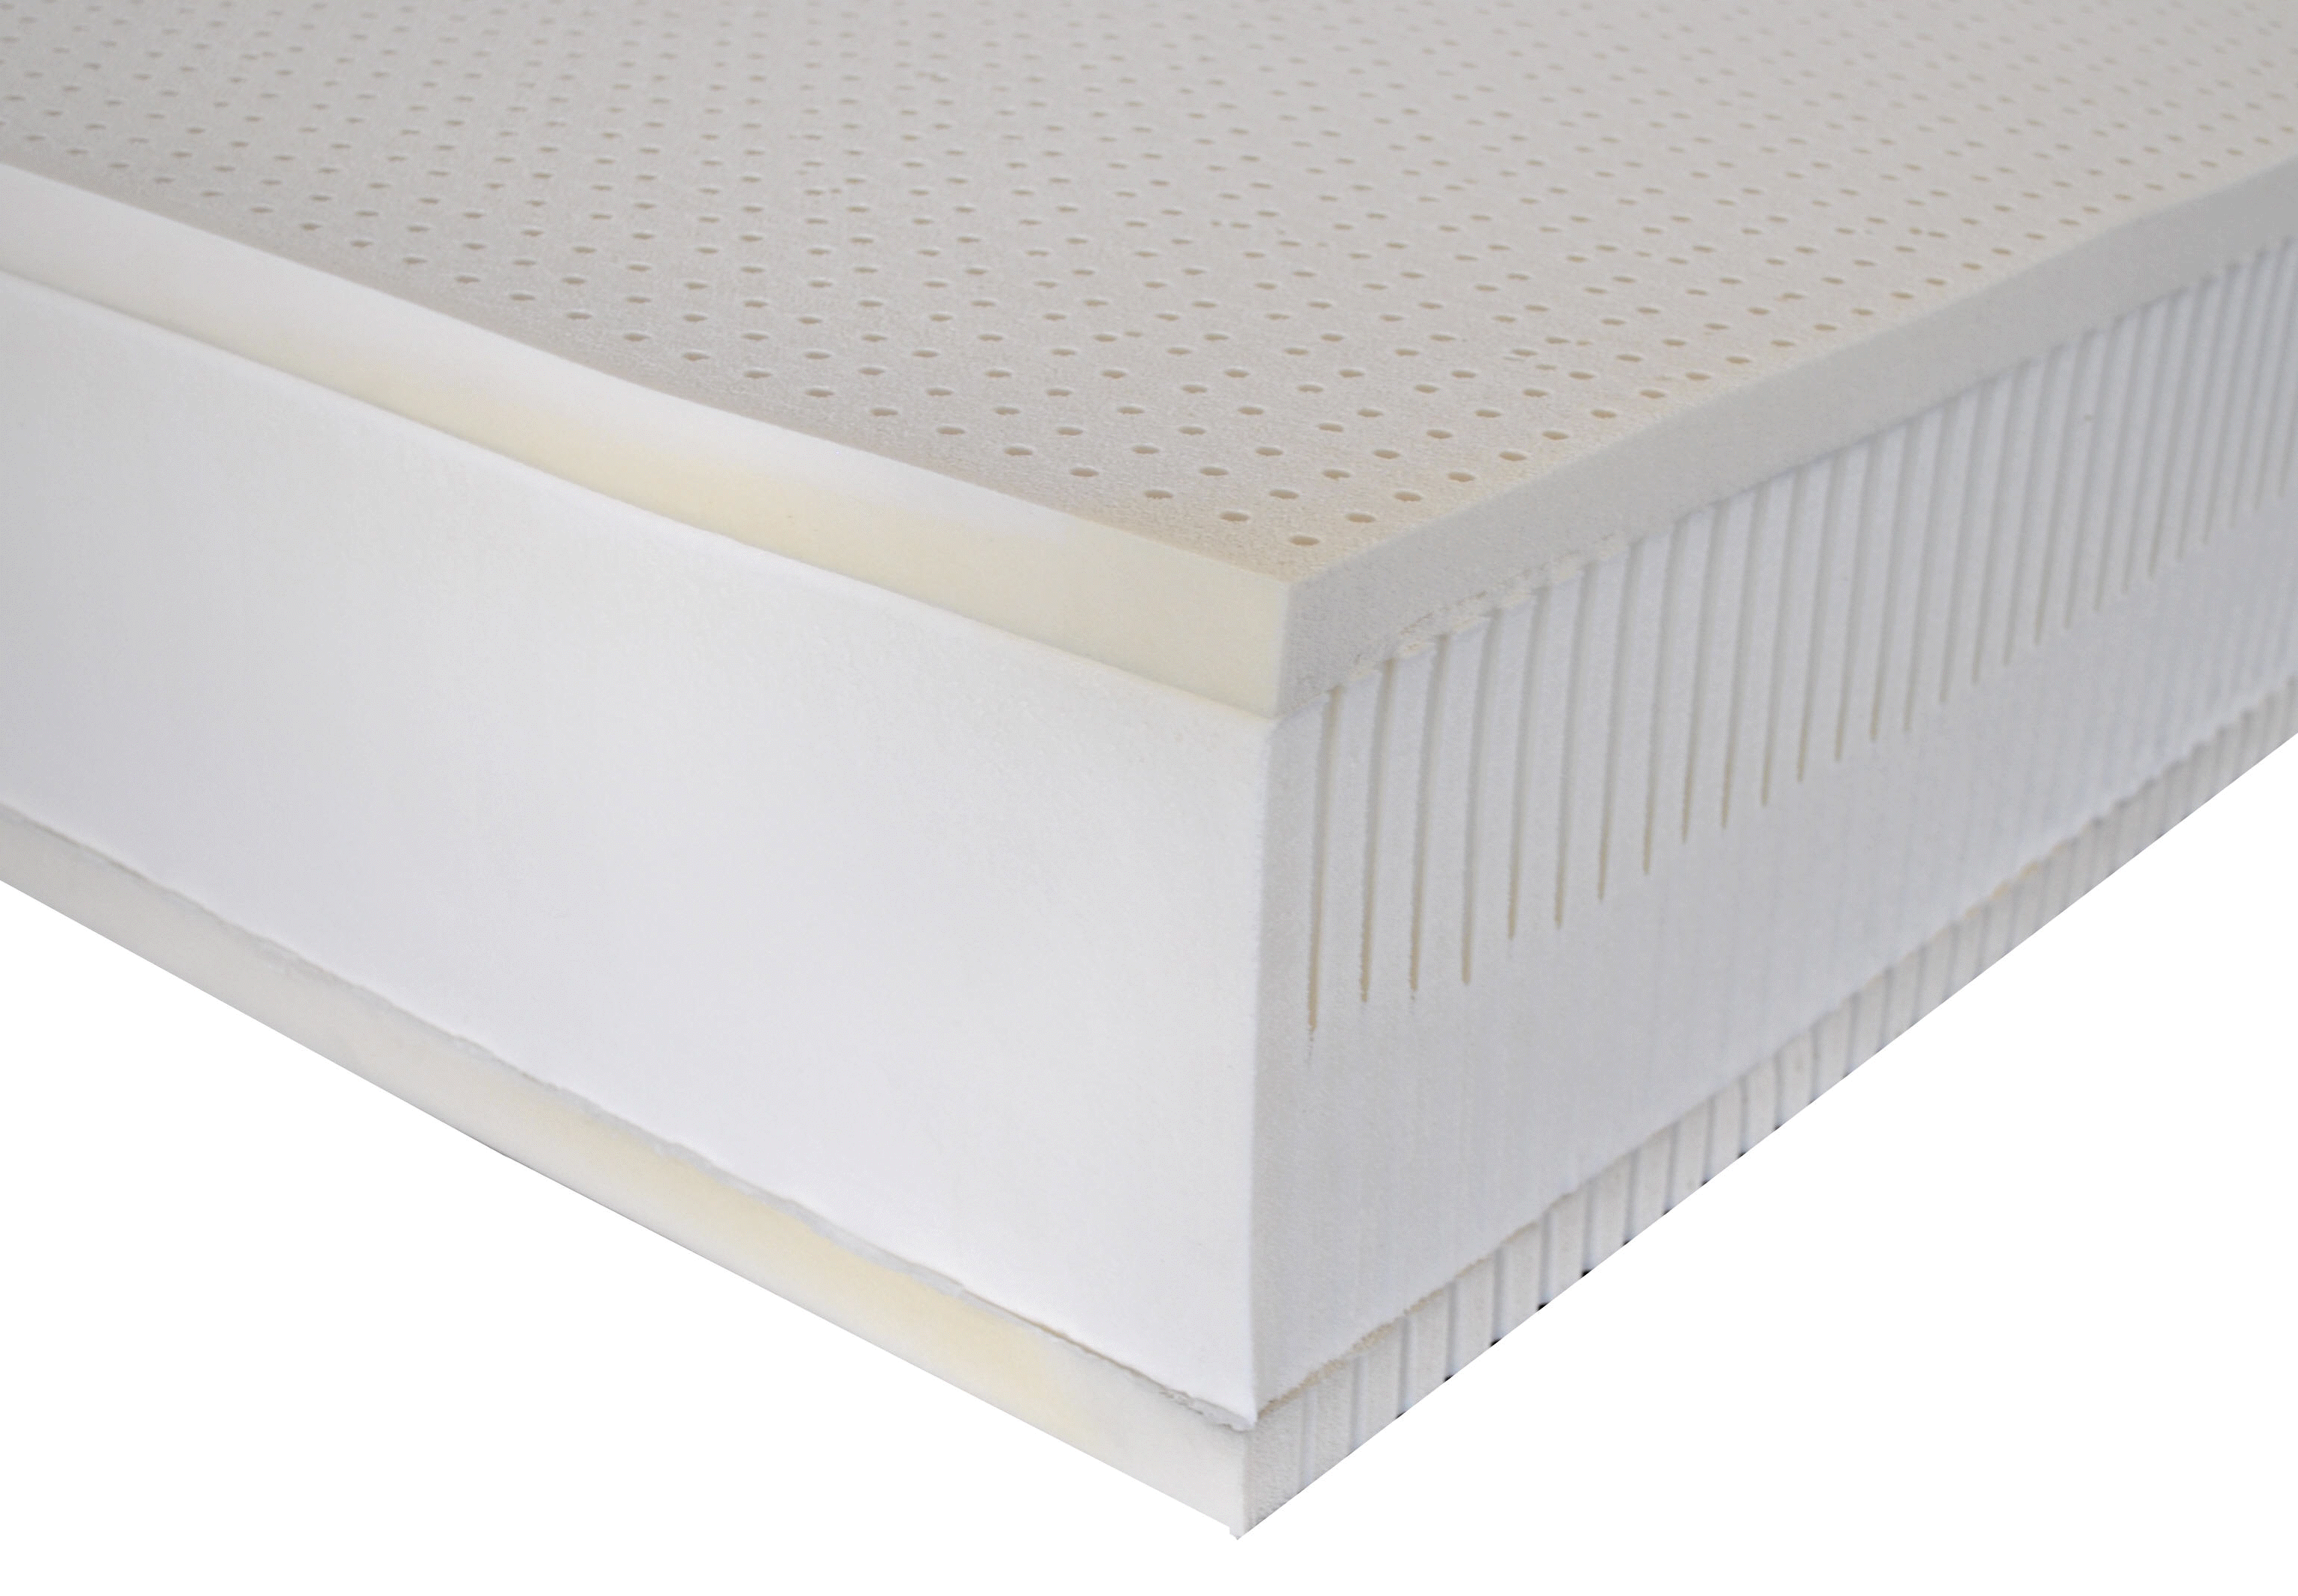 San Jose latex mattress hospital bed